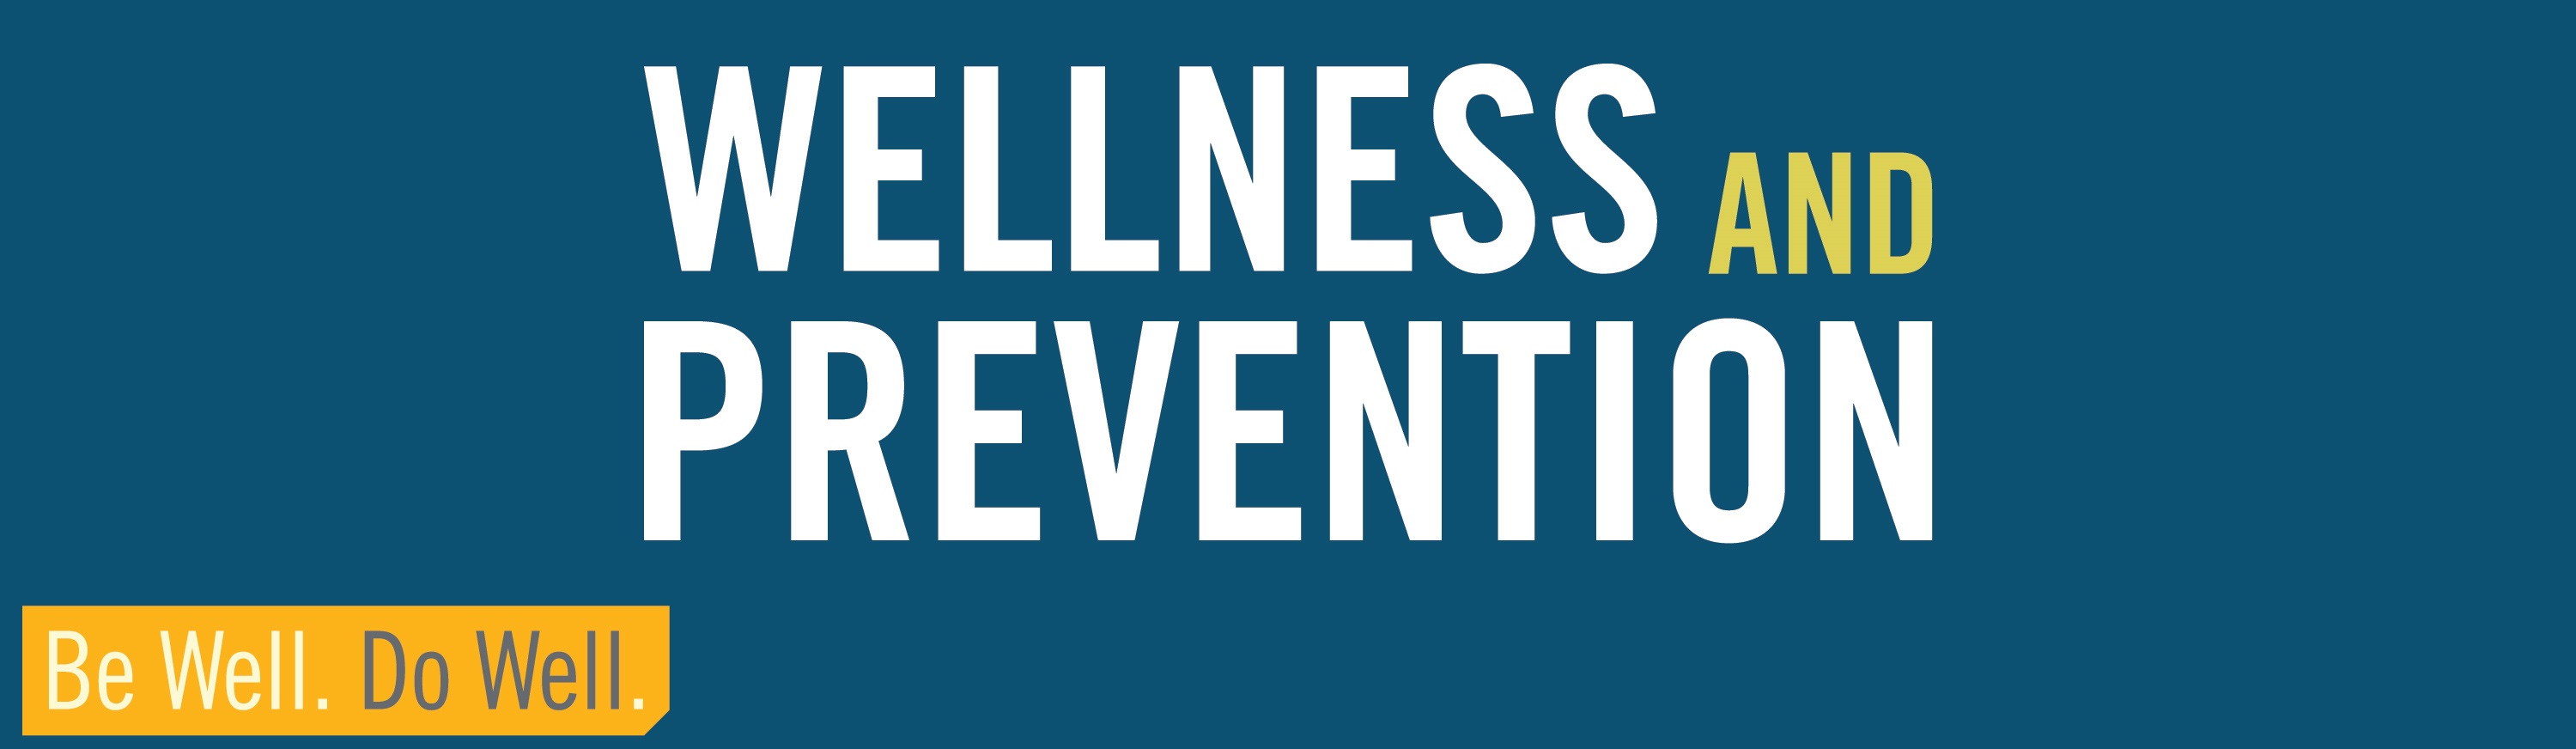 Wellness & Prevention Services Bumper